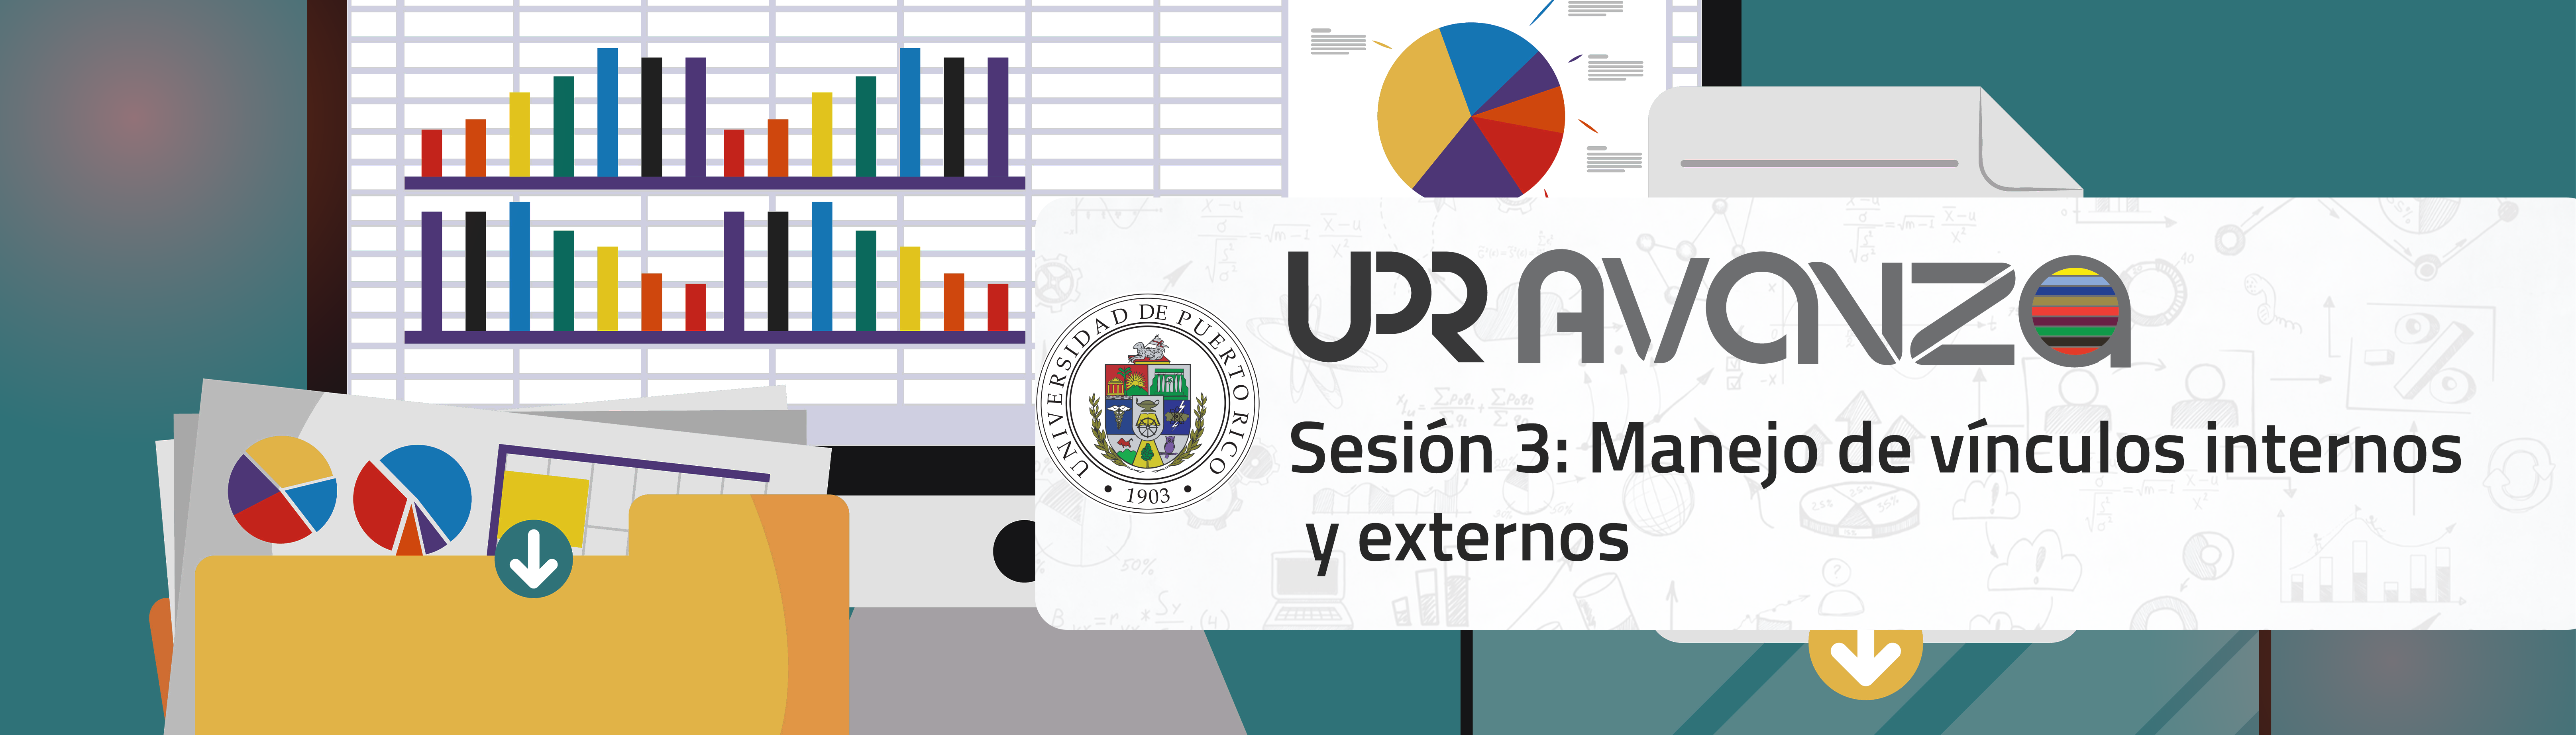 UPR-Avanza-MO_S3.png